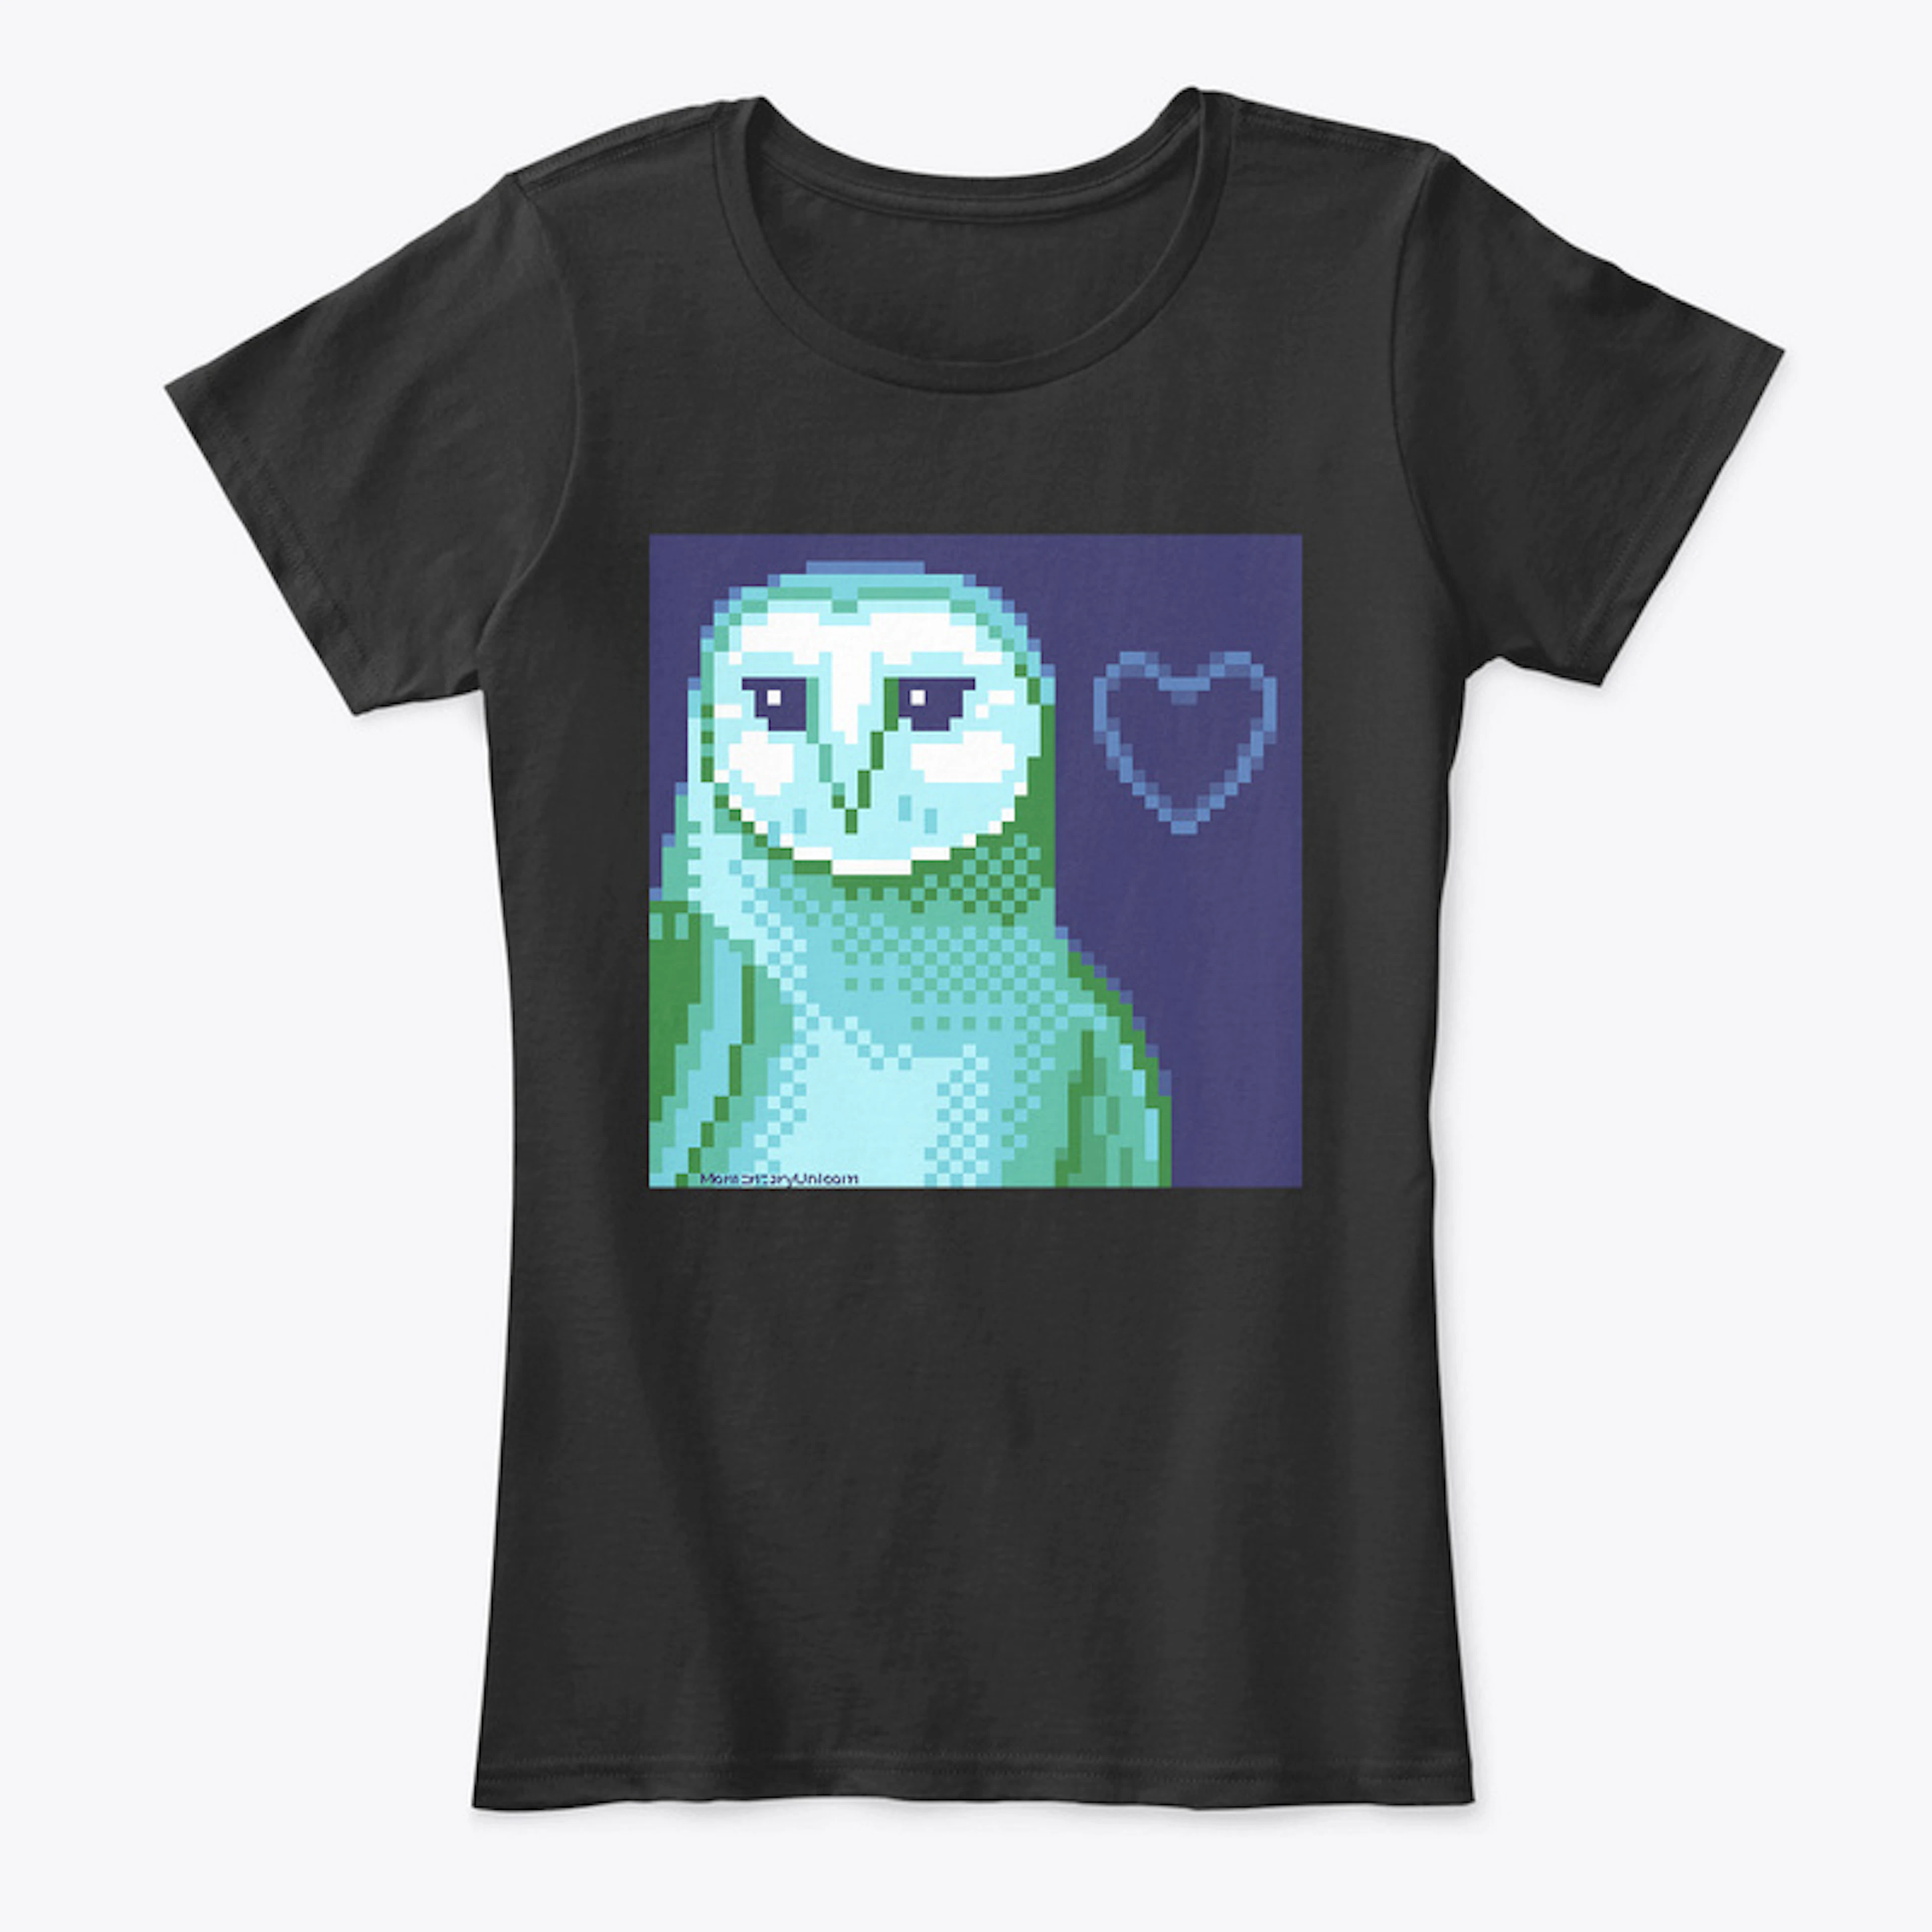 Barn Owl With Heart Pixel Art